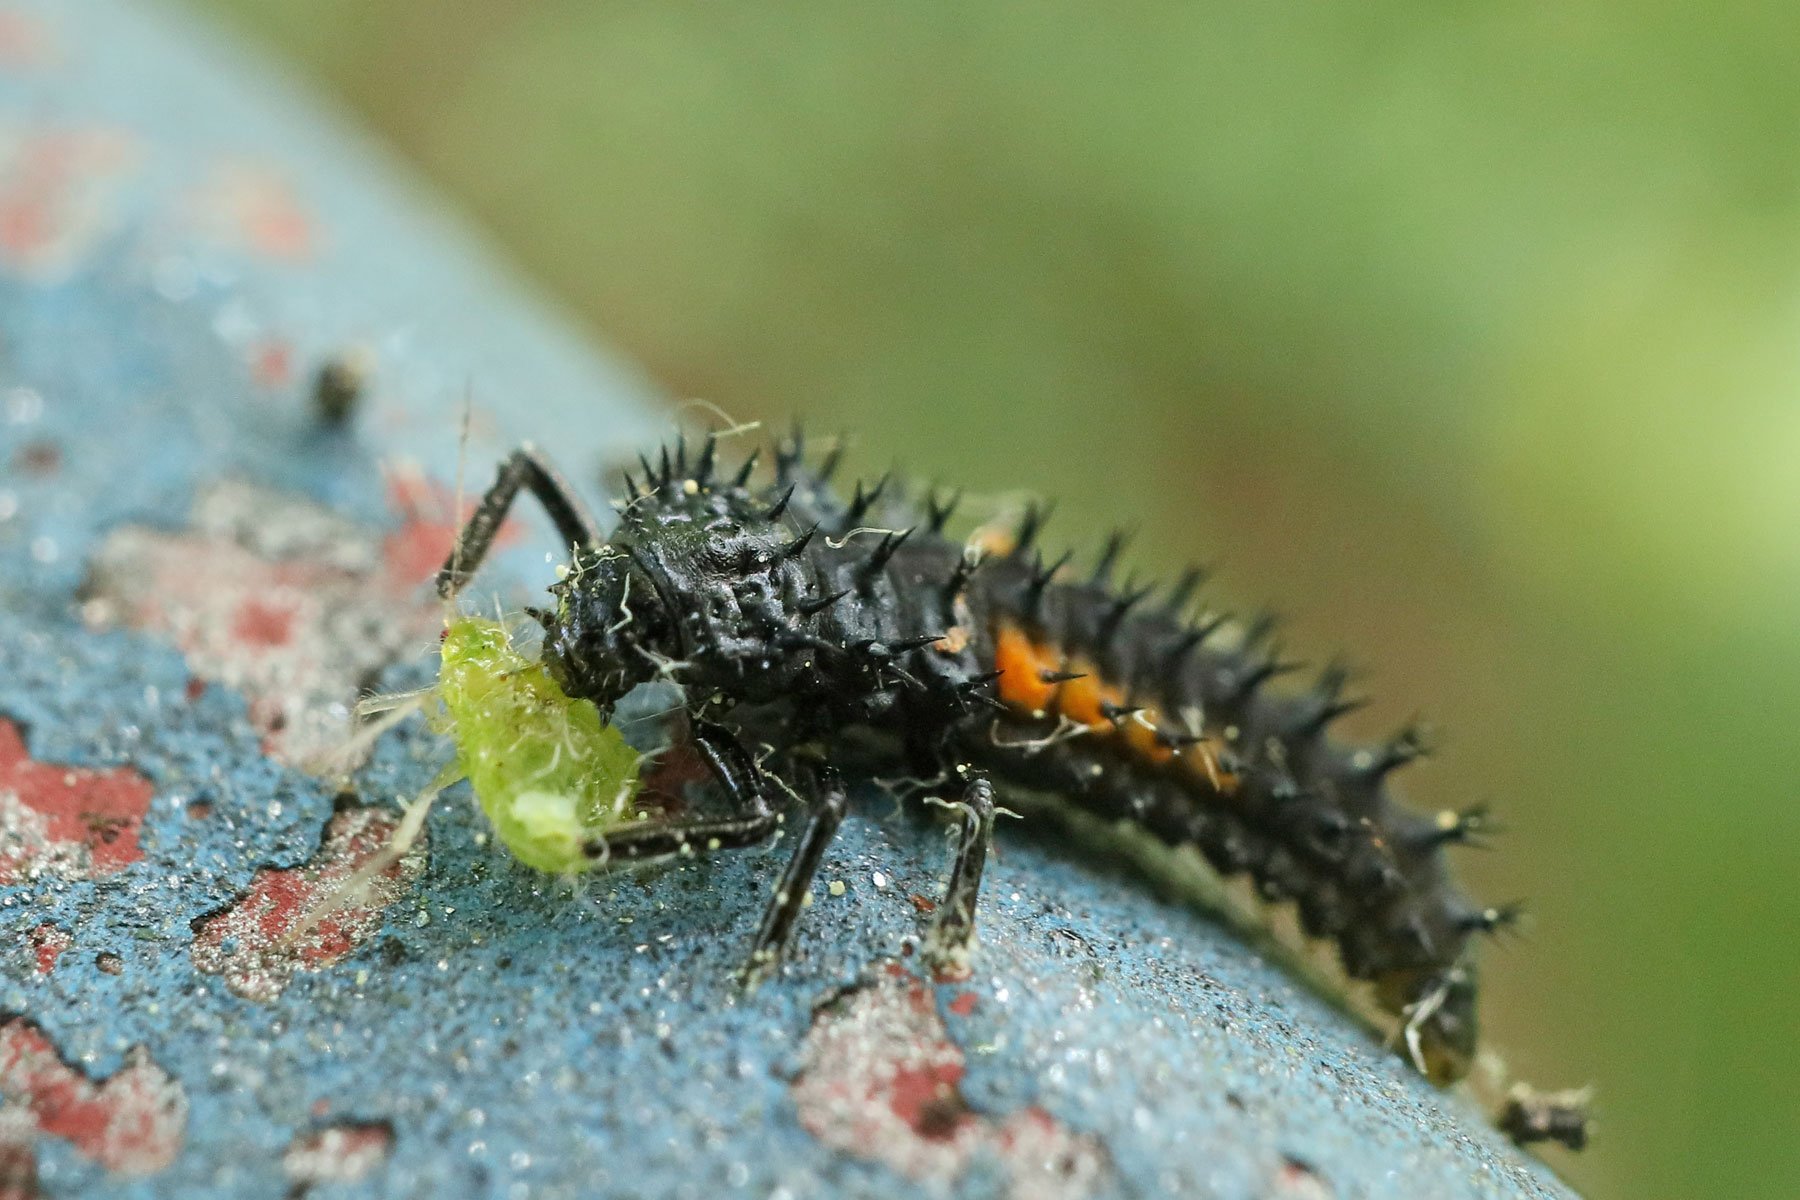 Asian Ladybeetle larva eating an aphid